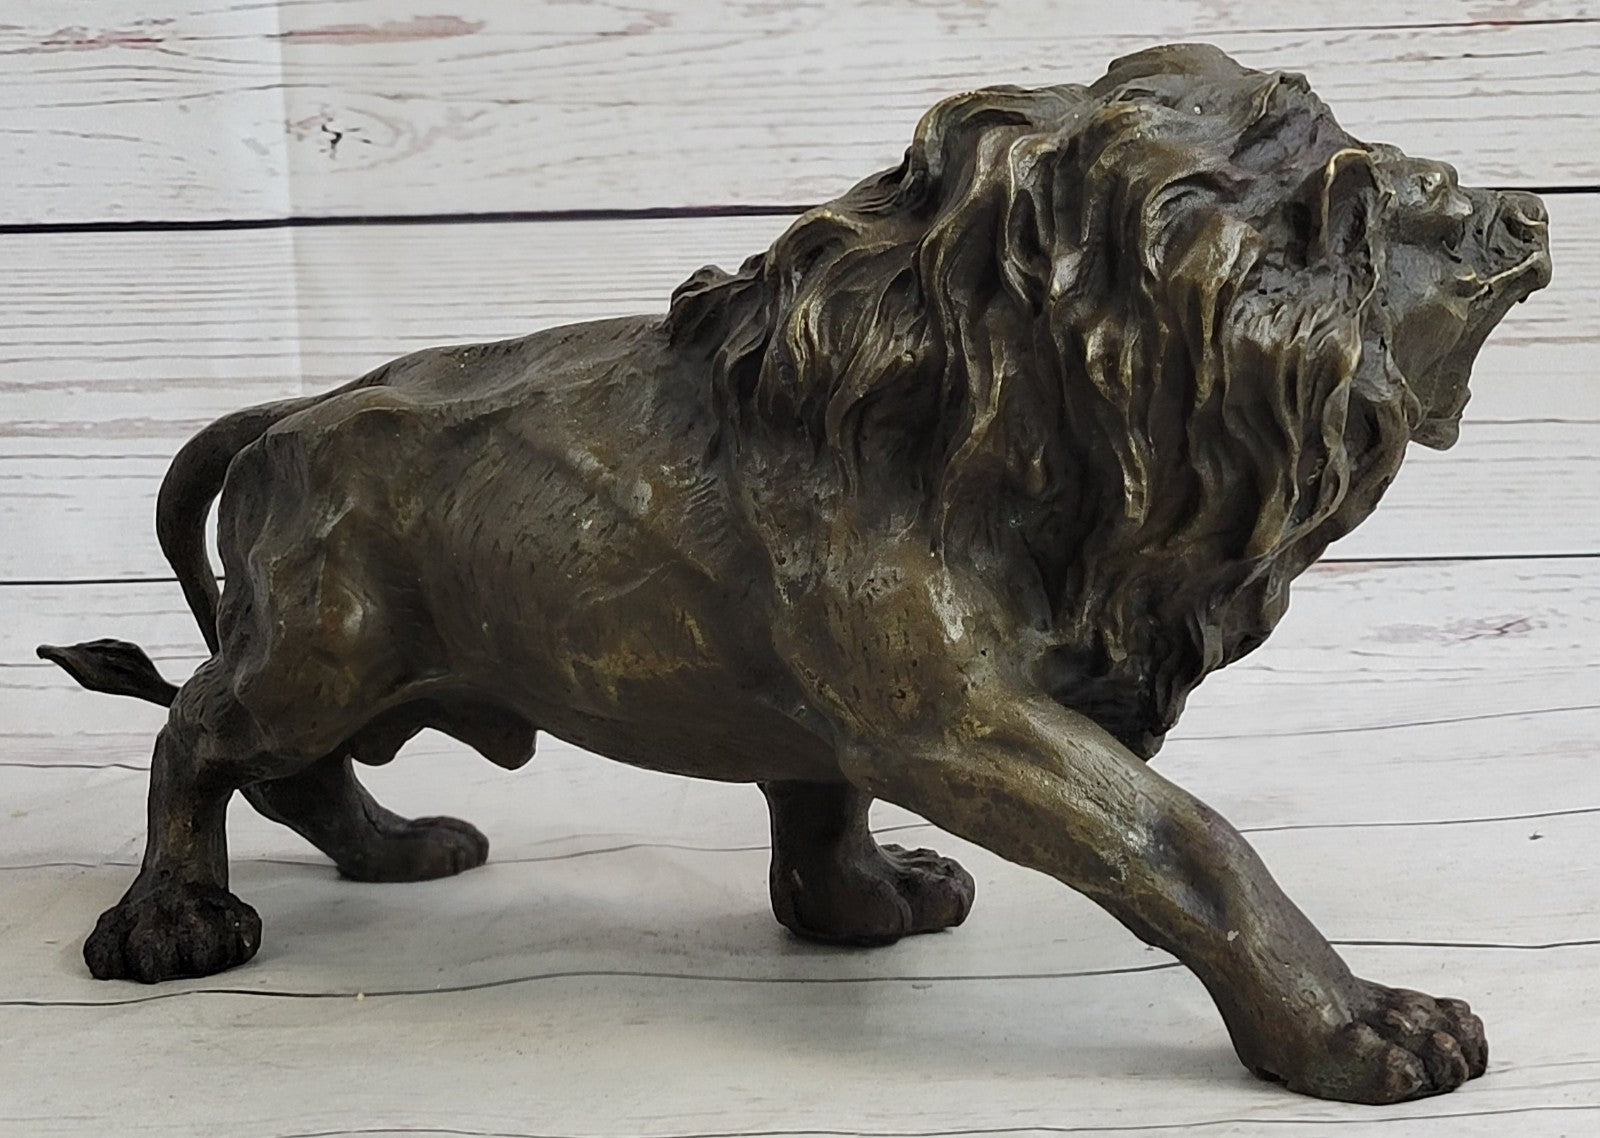 Handcrafted bronze sculpture SALE Deco Art Lion African Wildlife Cast Hot